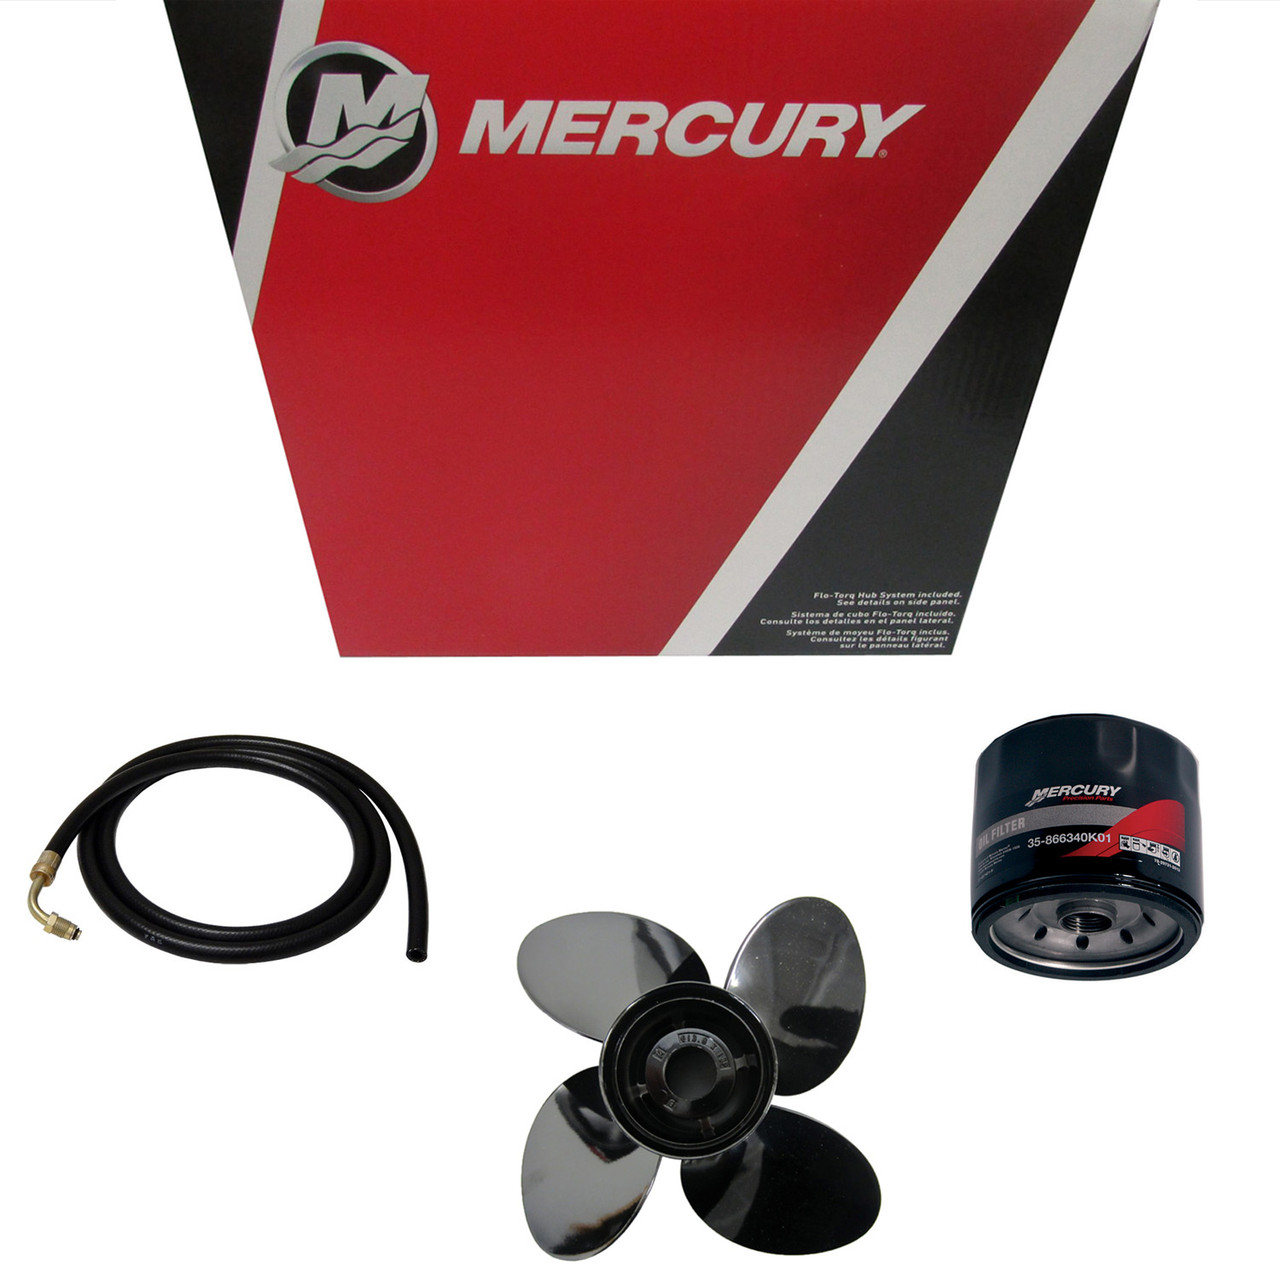 Mercury Marine / Mercruiser New OEM Gear Lub Hp, 858064Q01